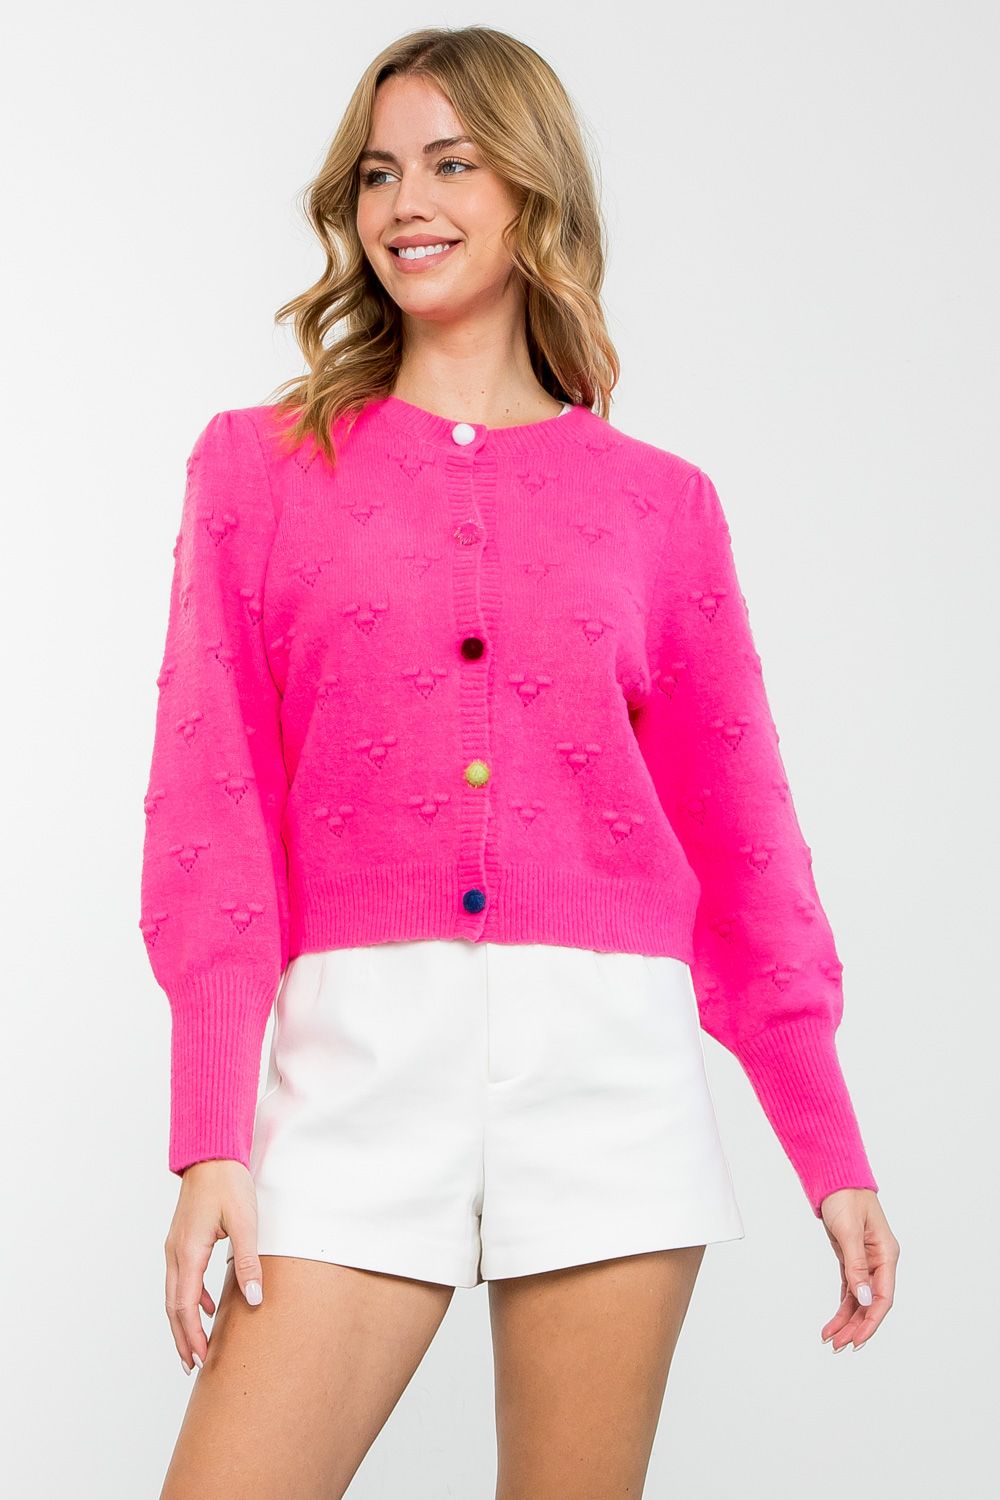 Button Up Rib Knit Sweater: AKA Pink button down sweater